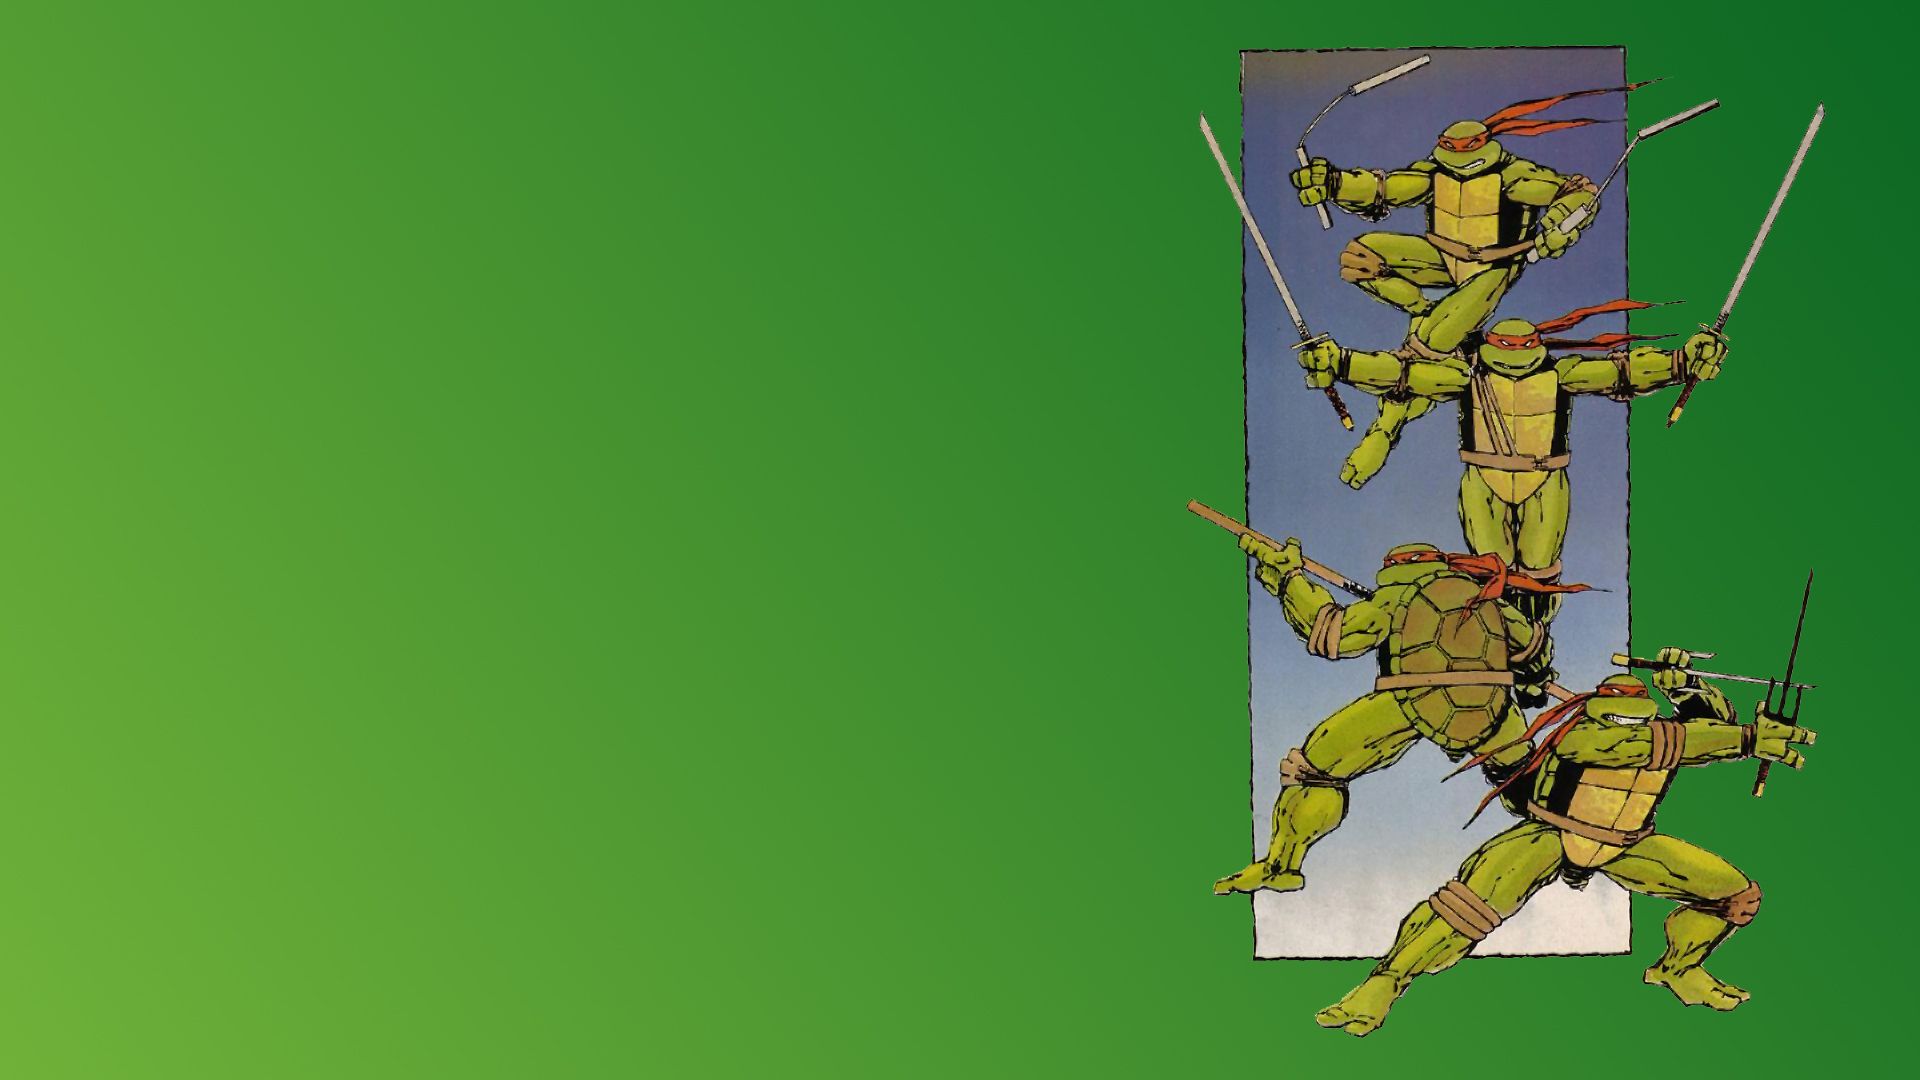 Mutant Ninja Turtles Background. Mind Over Mutant Crash Bandicoot Wallpaper, Teenage Mutant Ninja Turtles Wallpaper and Teenage Mutant Ninja Turtles Desktop Background